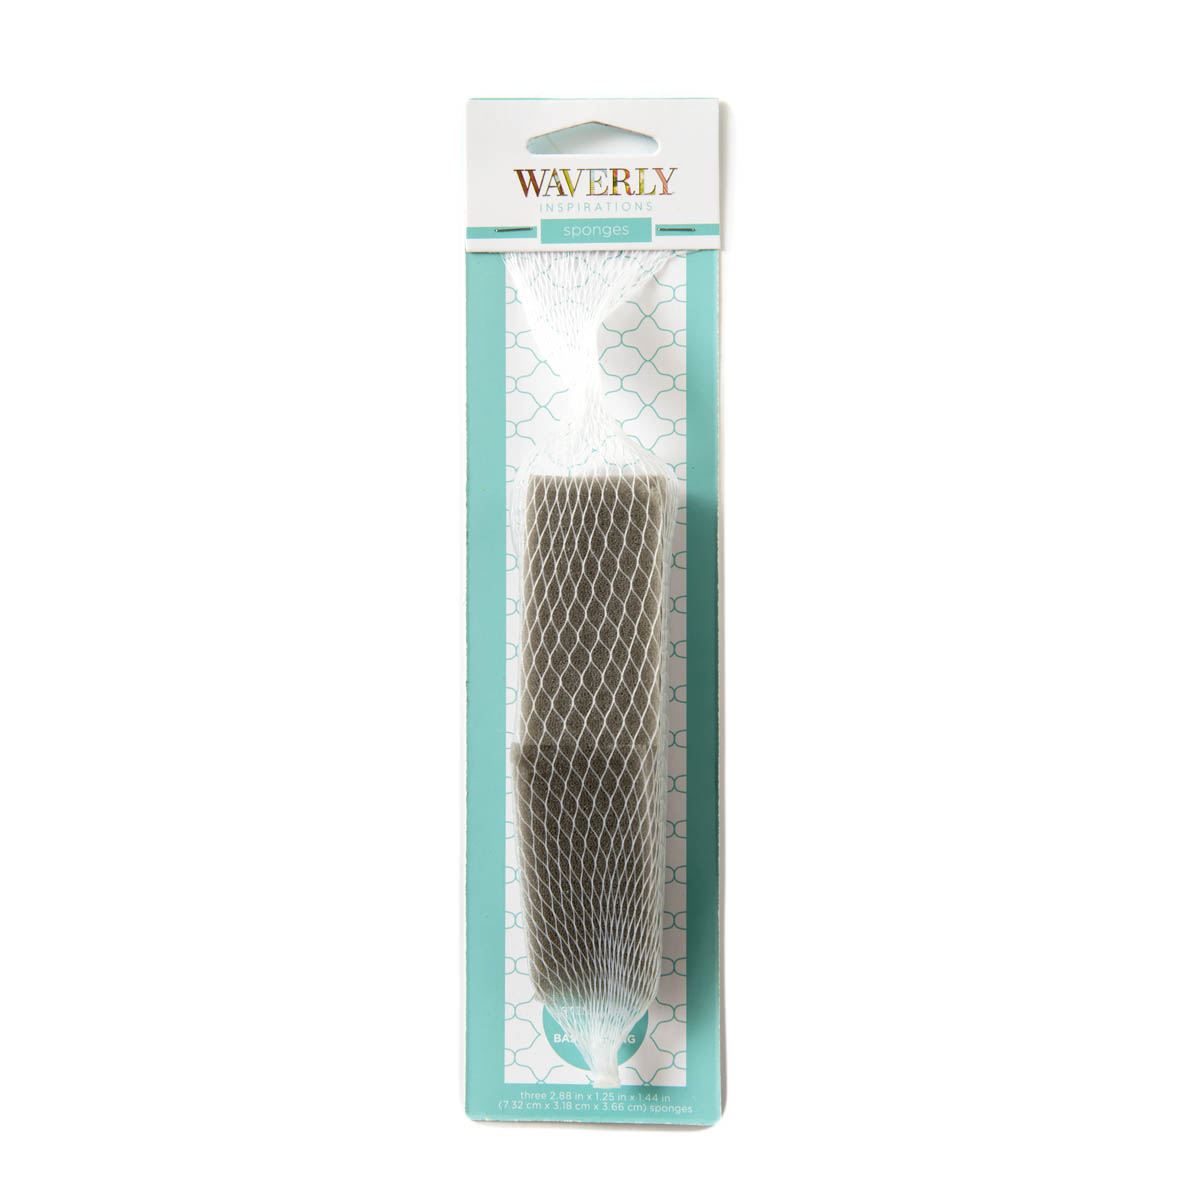 Waverly ® Inspirations Tools - Sponge Applicators, 3 pc. - 60743E